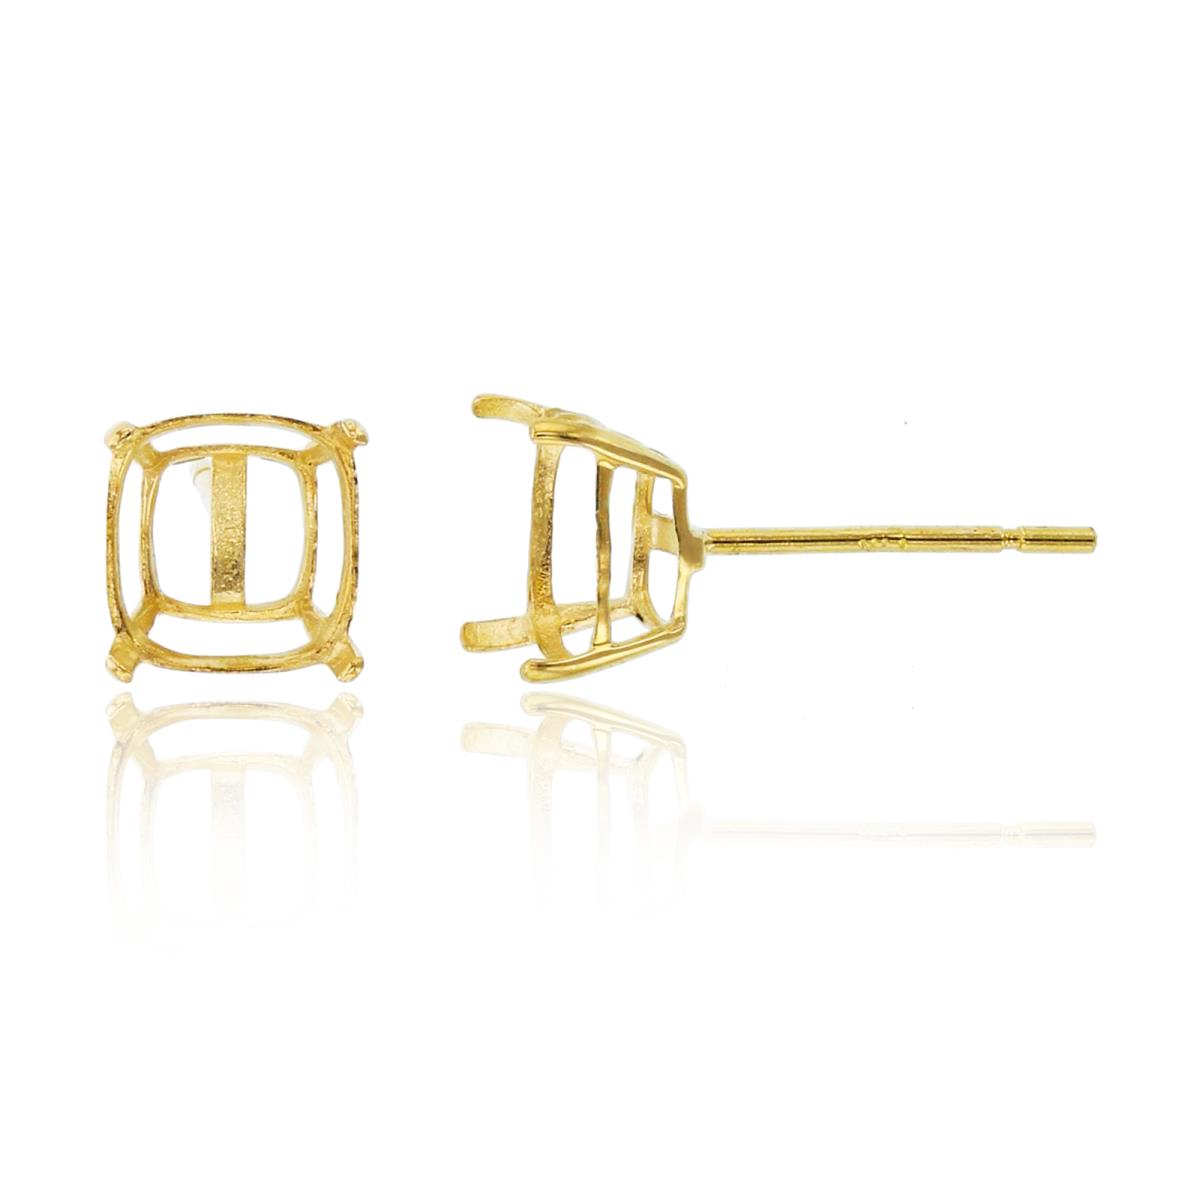 10K Yellow Gold 6x6mm Cushion Basket Stud Earrings-1PR. No stones.